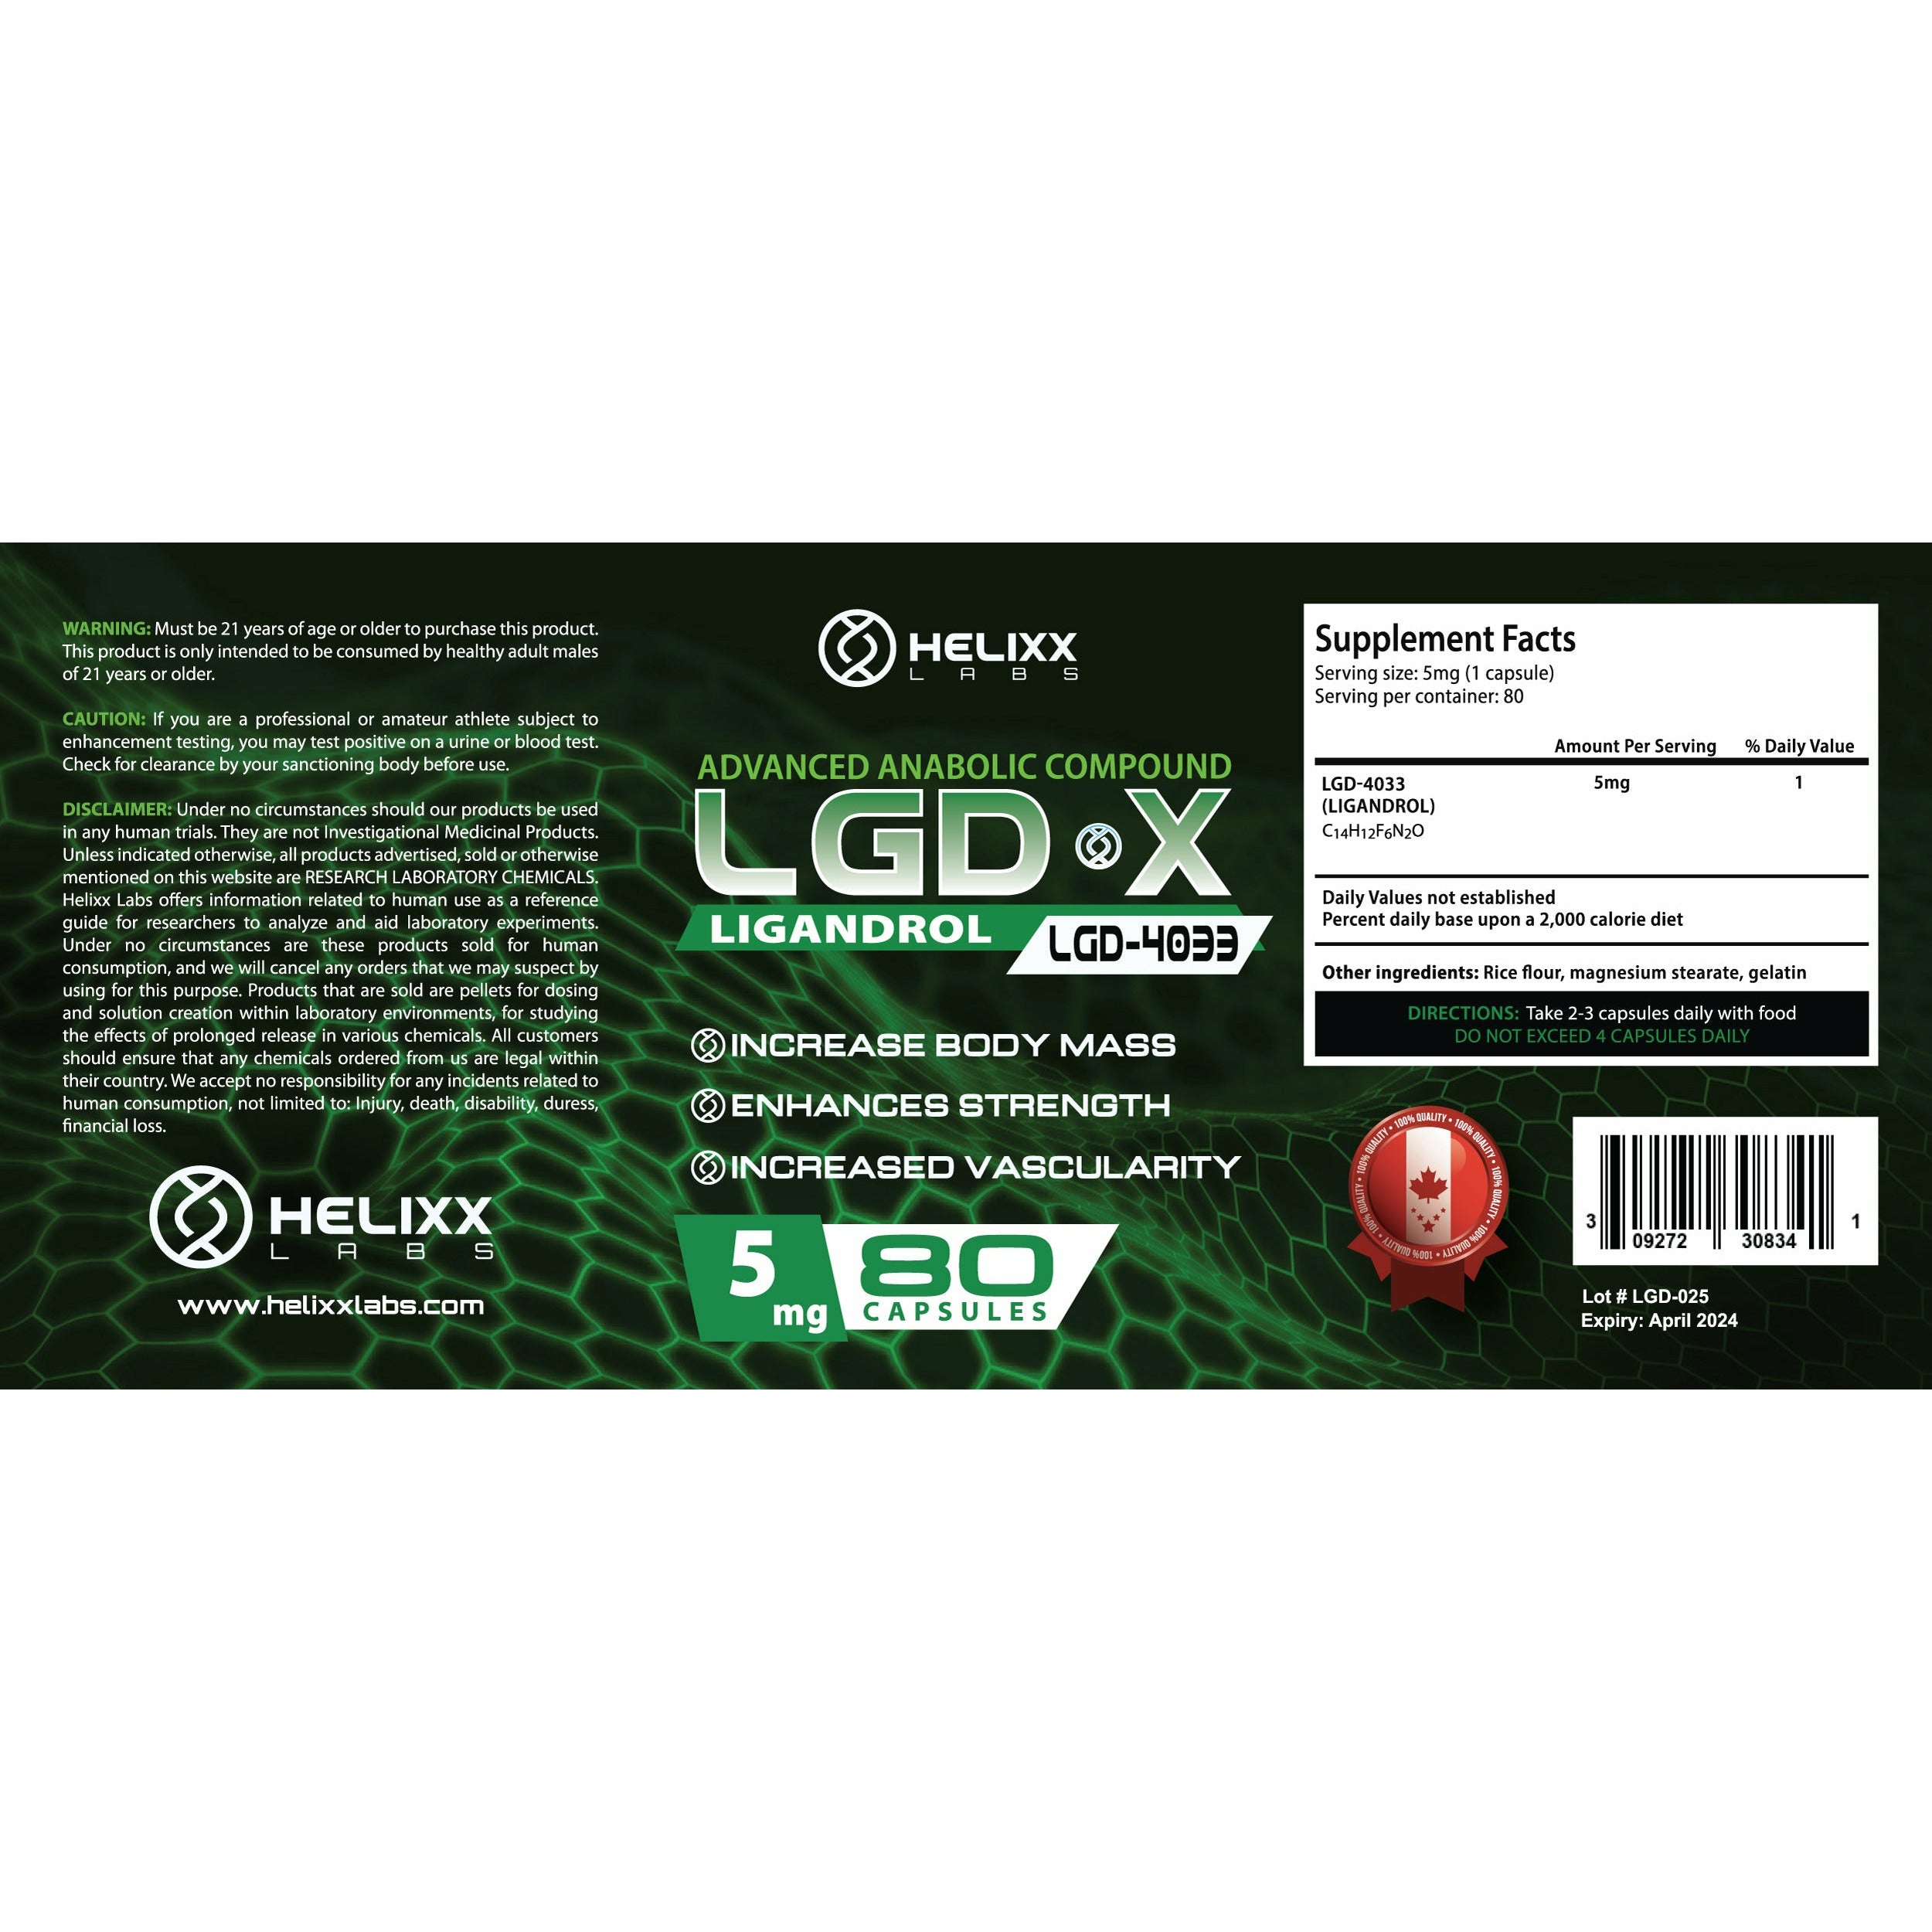 Helixx LGD X (5mg - 60 capsules) Vitamins & Supplements Helixx